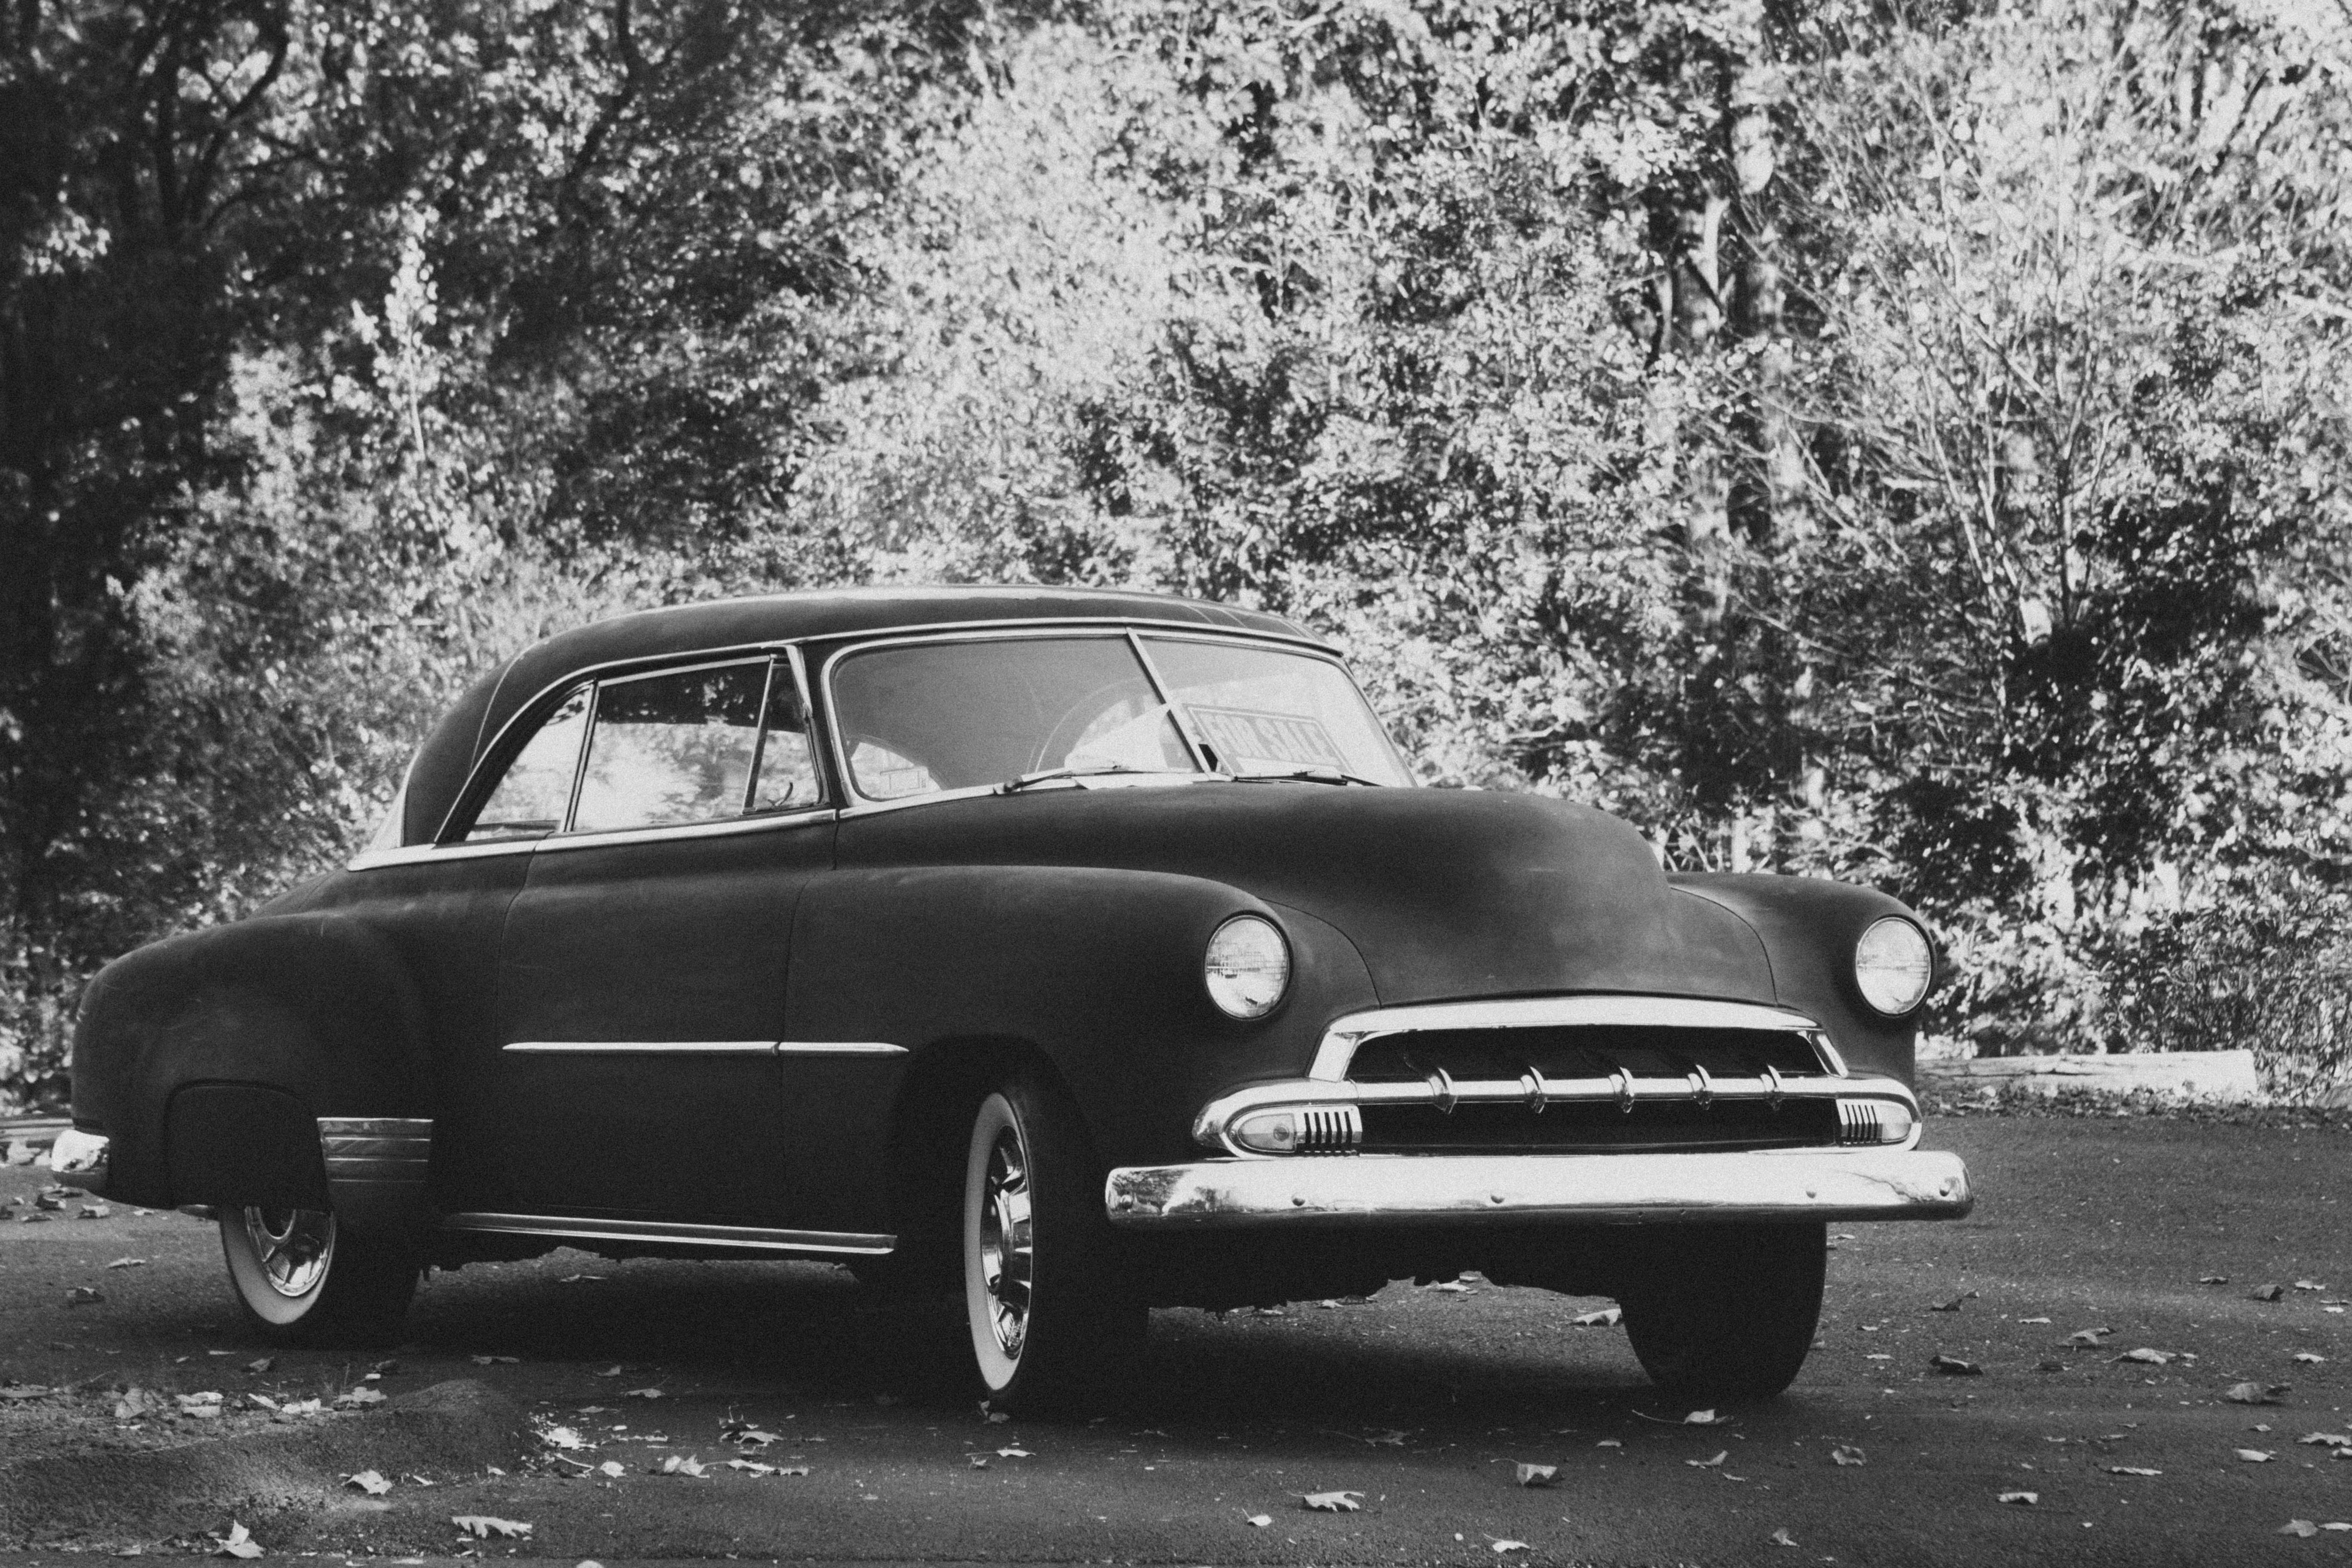 Americana. Vintage car. Photo copyright Miceli Productions. http://MiceliProductions.com